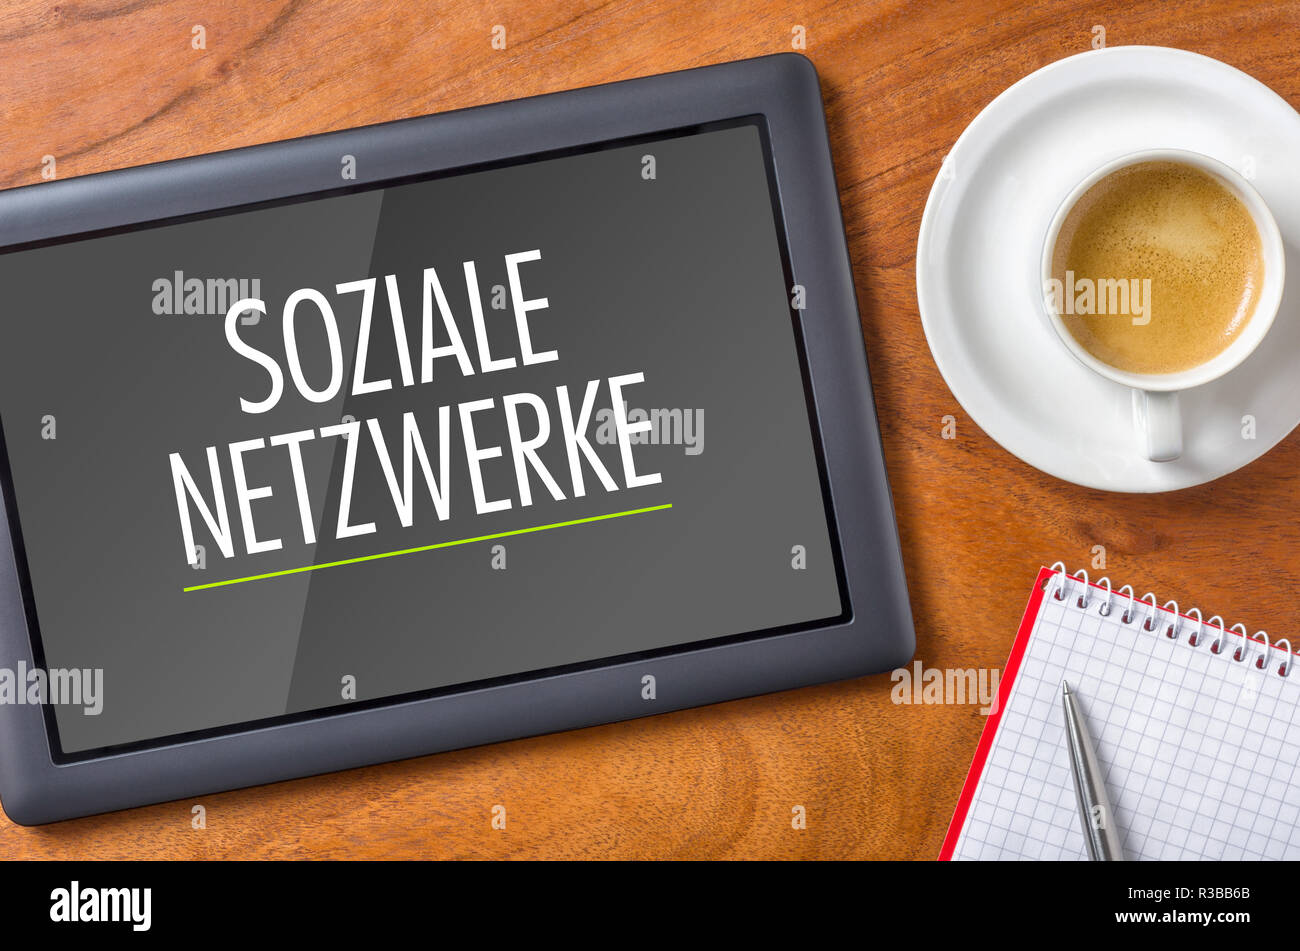 tablet on desk - social networks Stock Photo